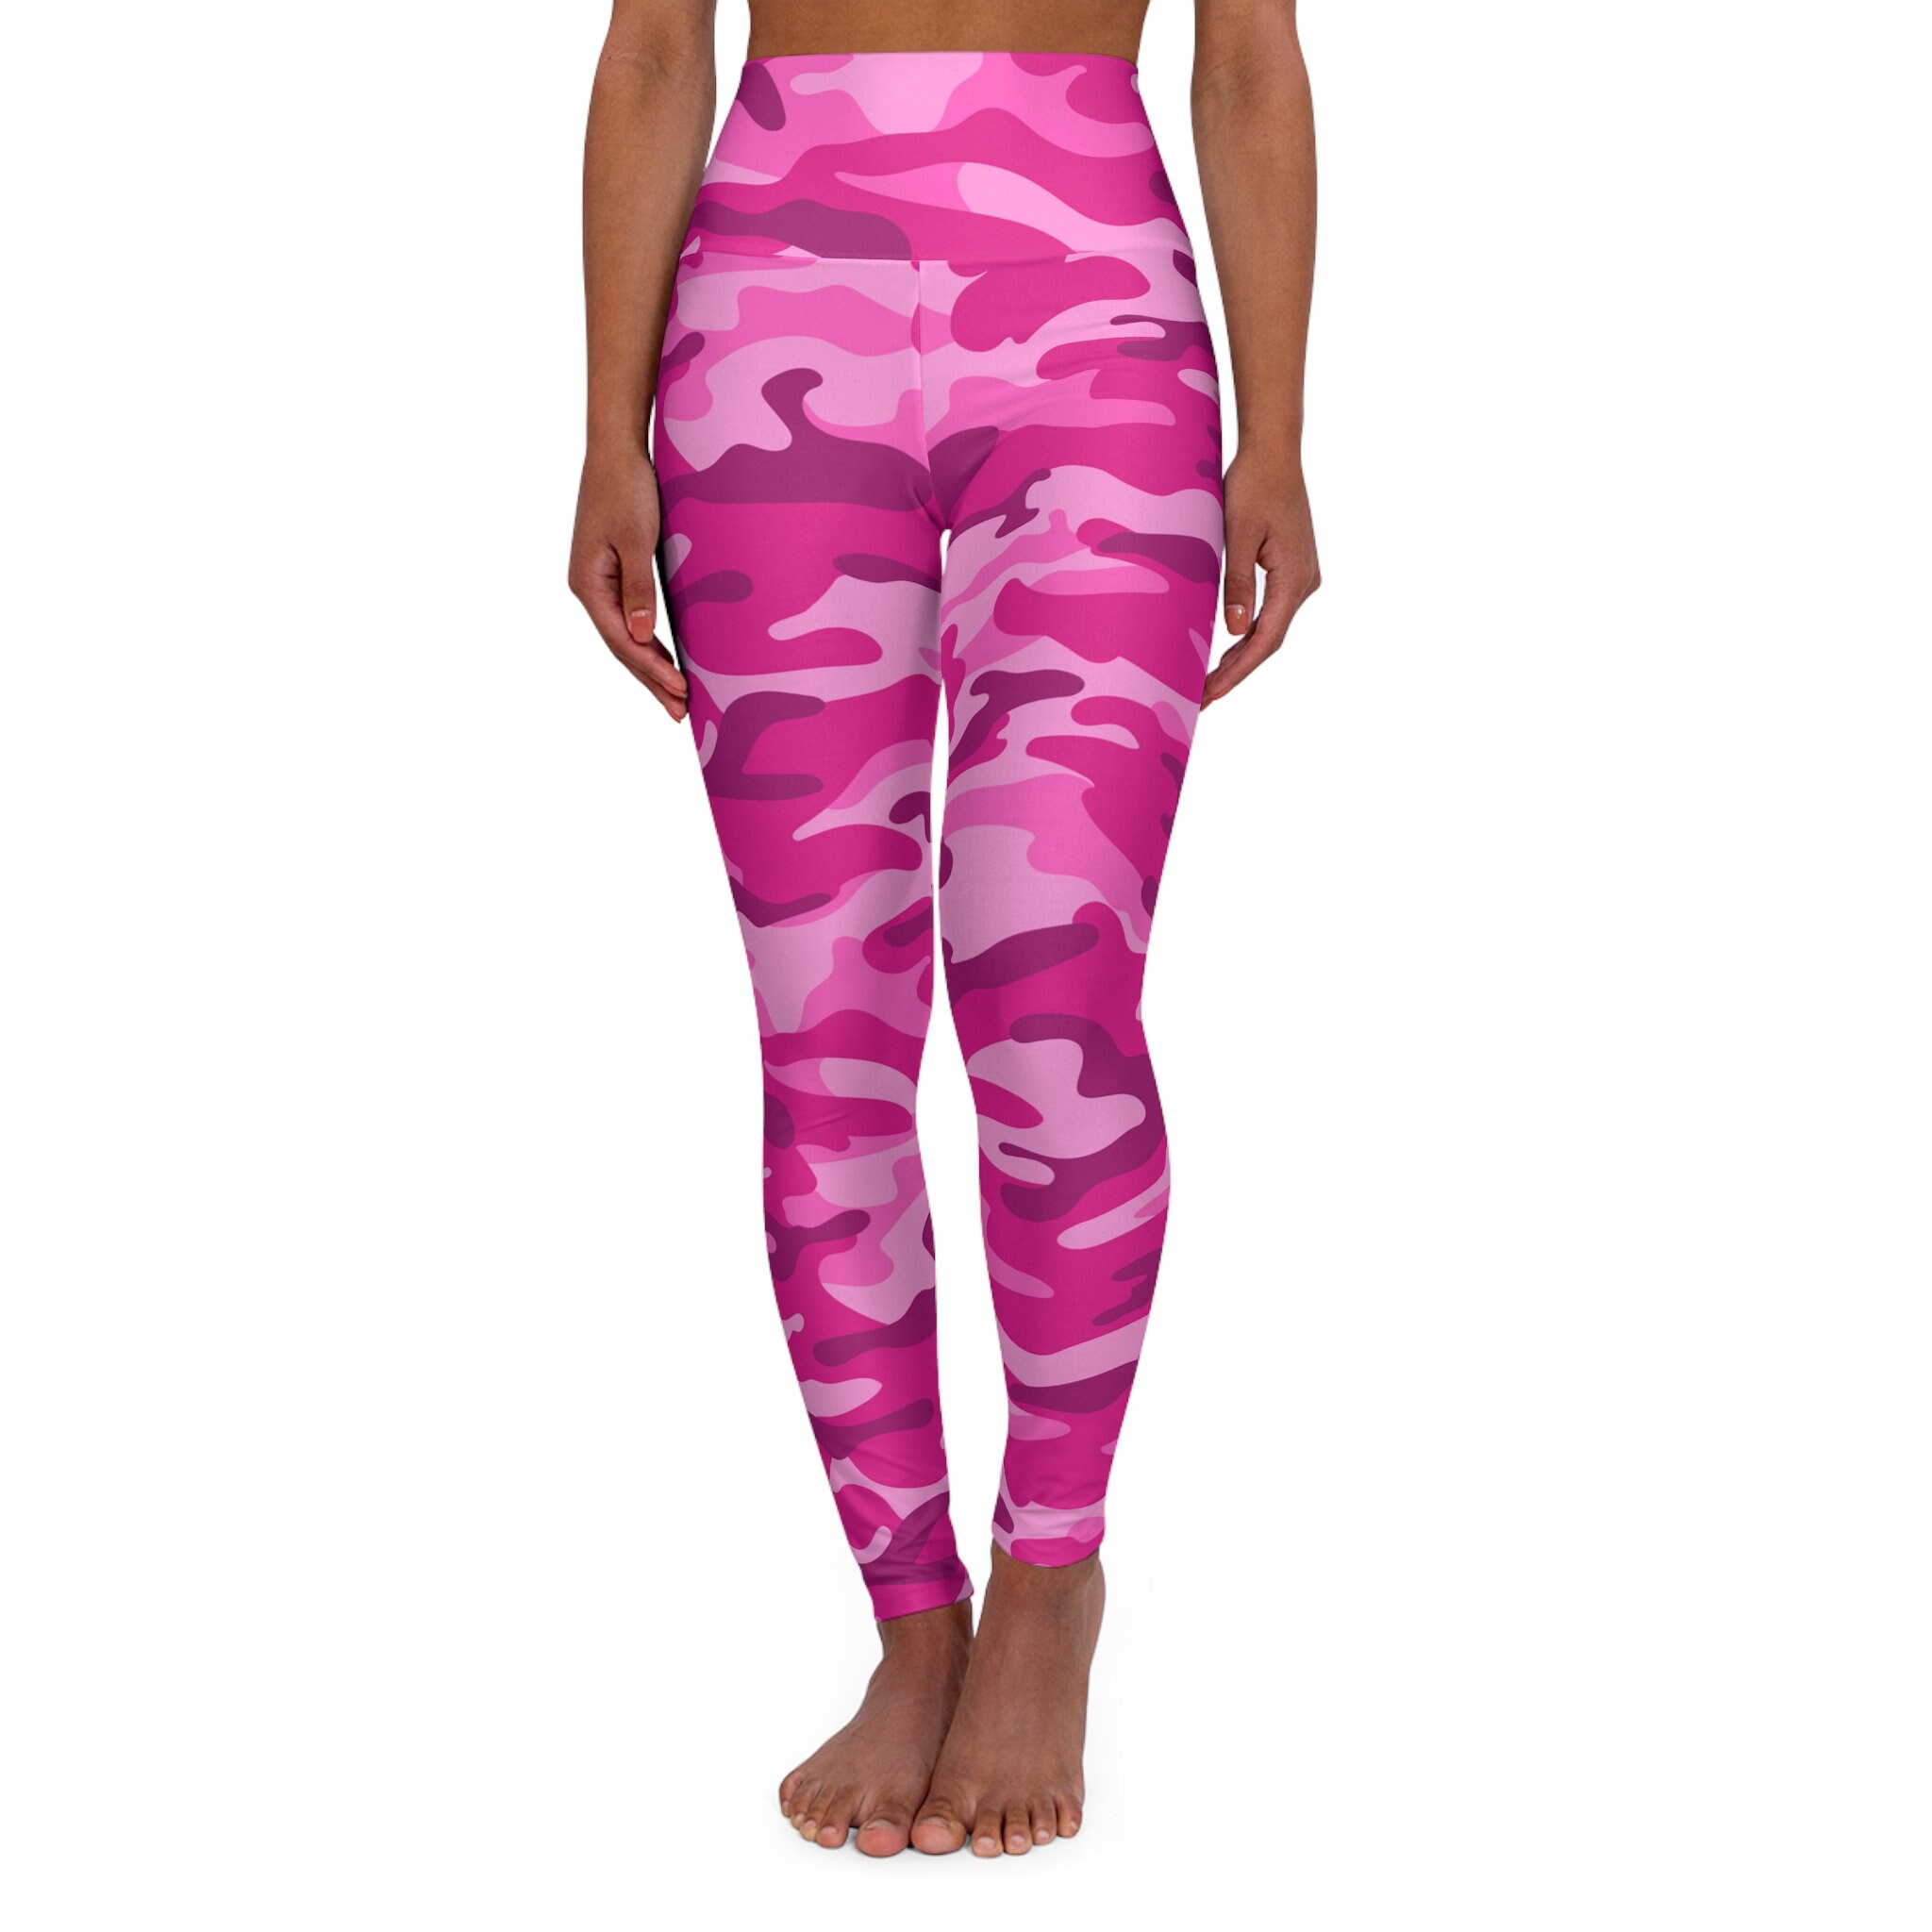 Stylish Pink Camo Leggings by Calvin Klein